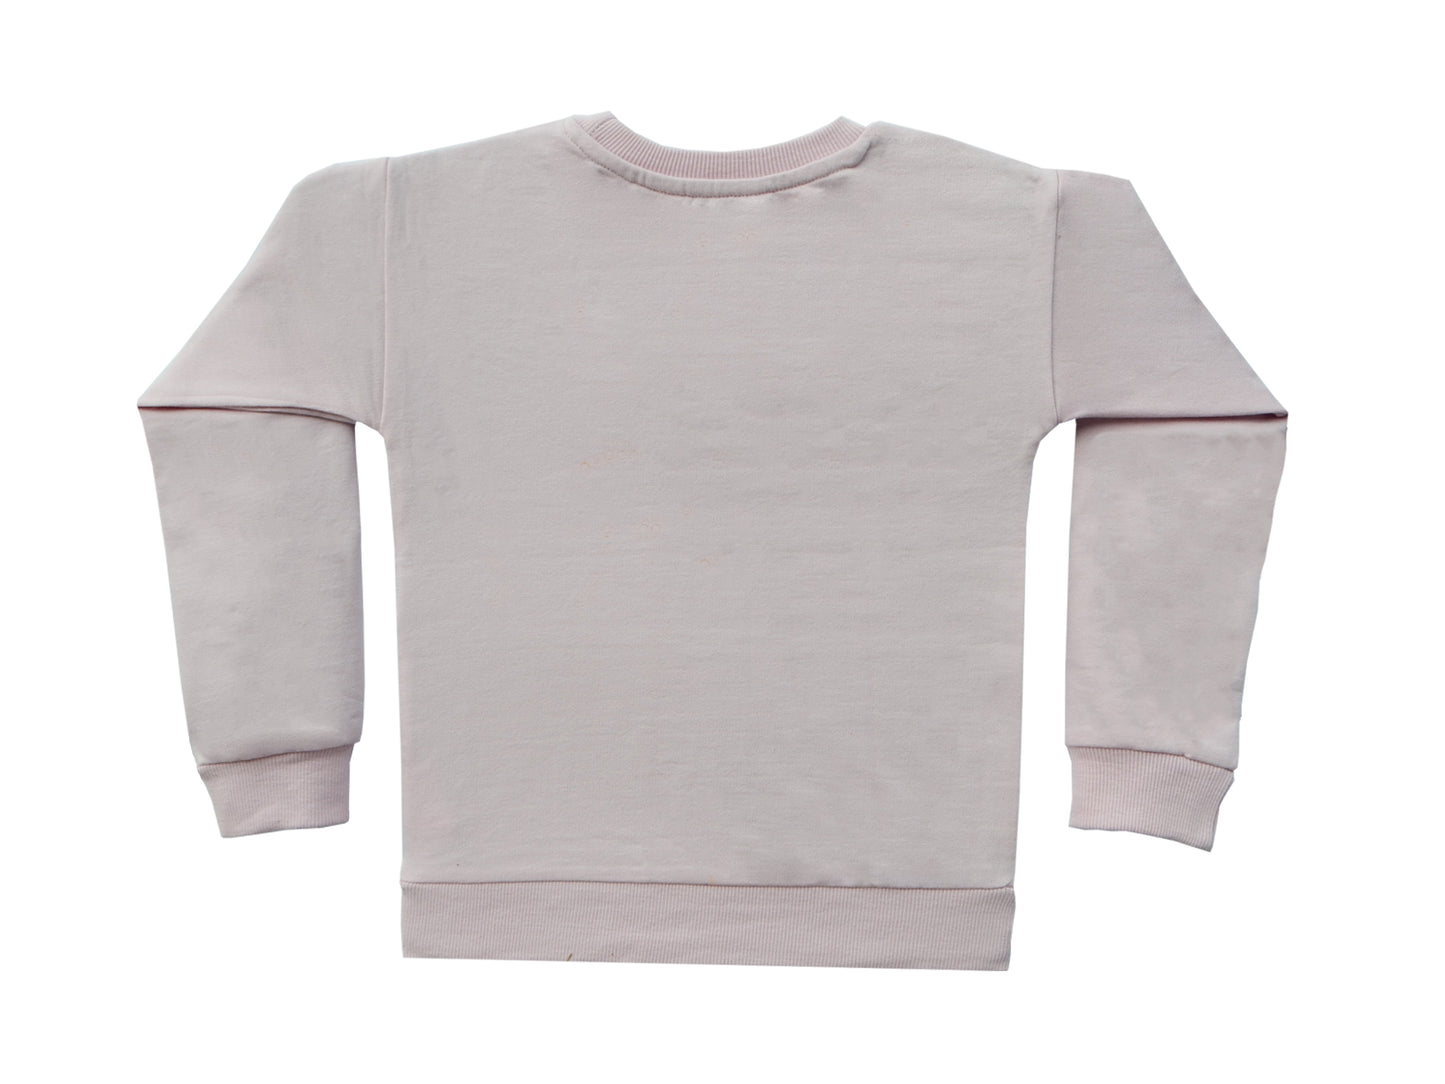 Silver Kraft Sweatshirt For Girls (tsg203)